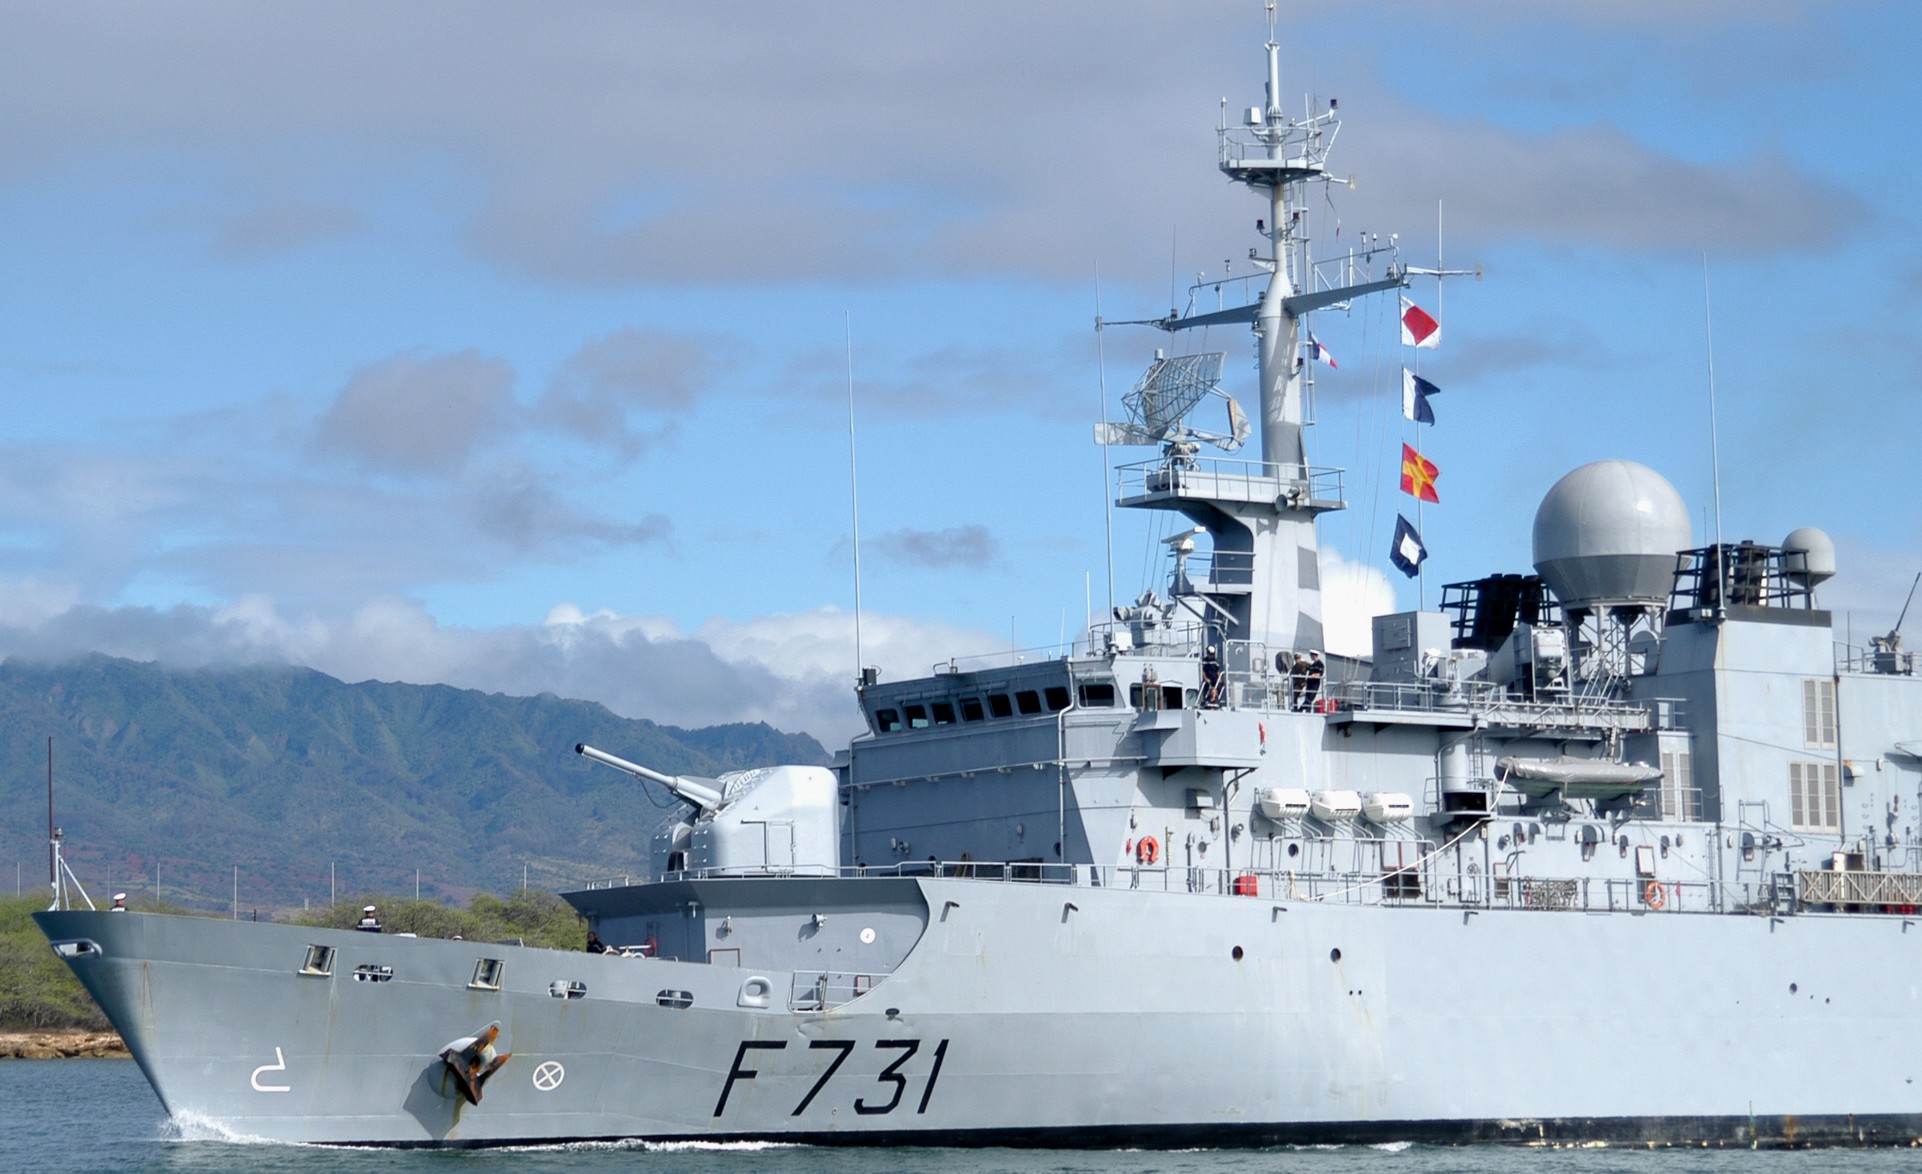 f-731 fs prairial floreal class frigate french navy marine nationale fregate surveillance 06